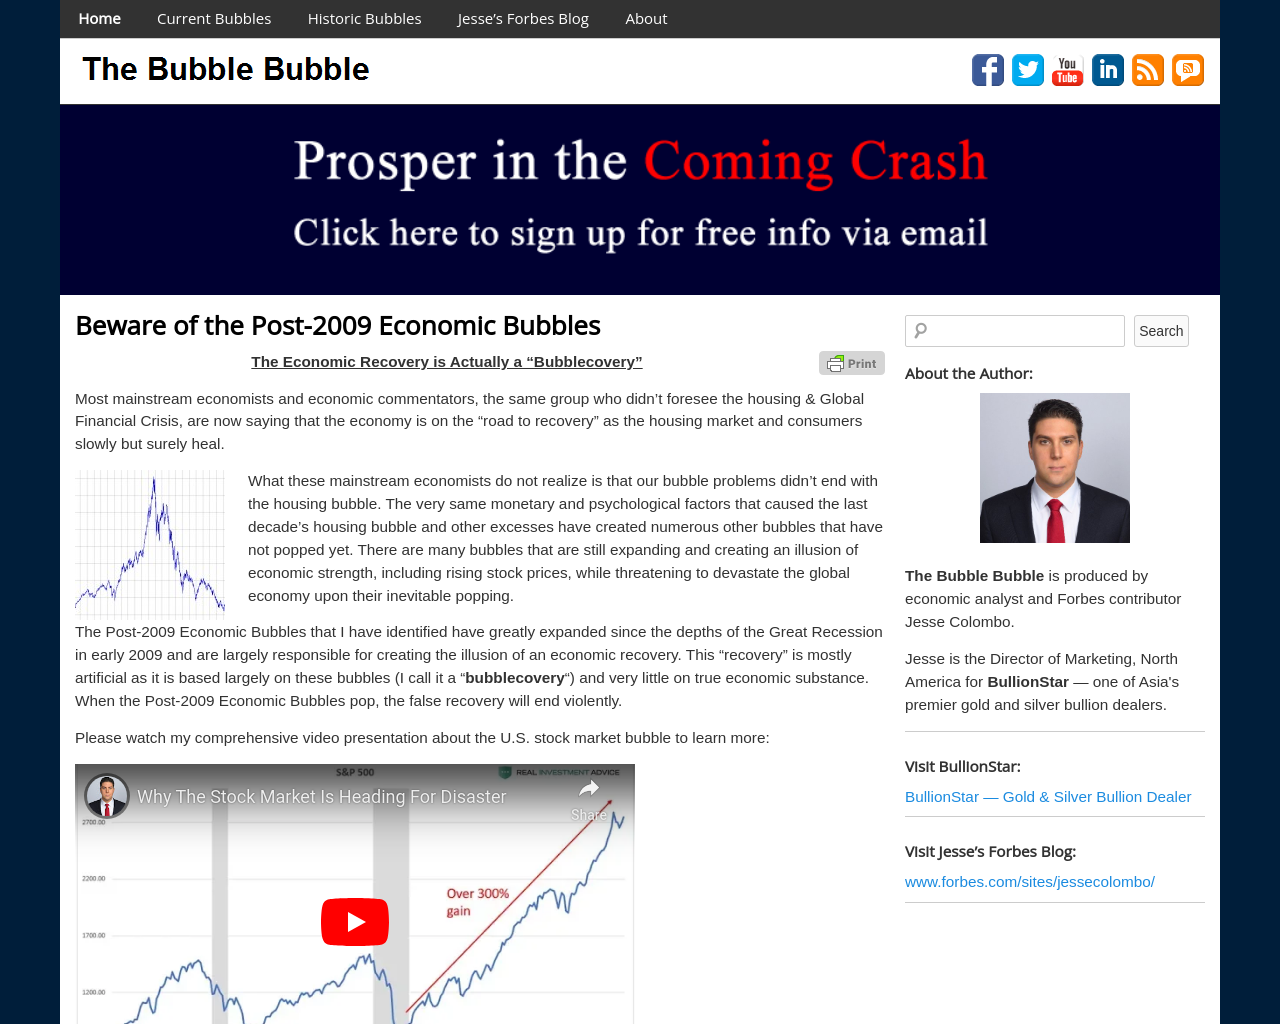 thebubblebubble.com